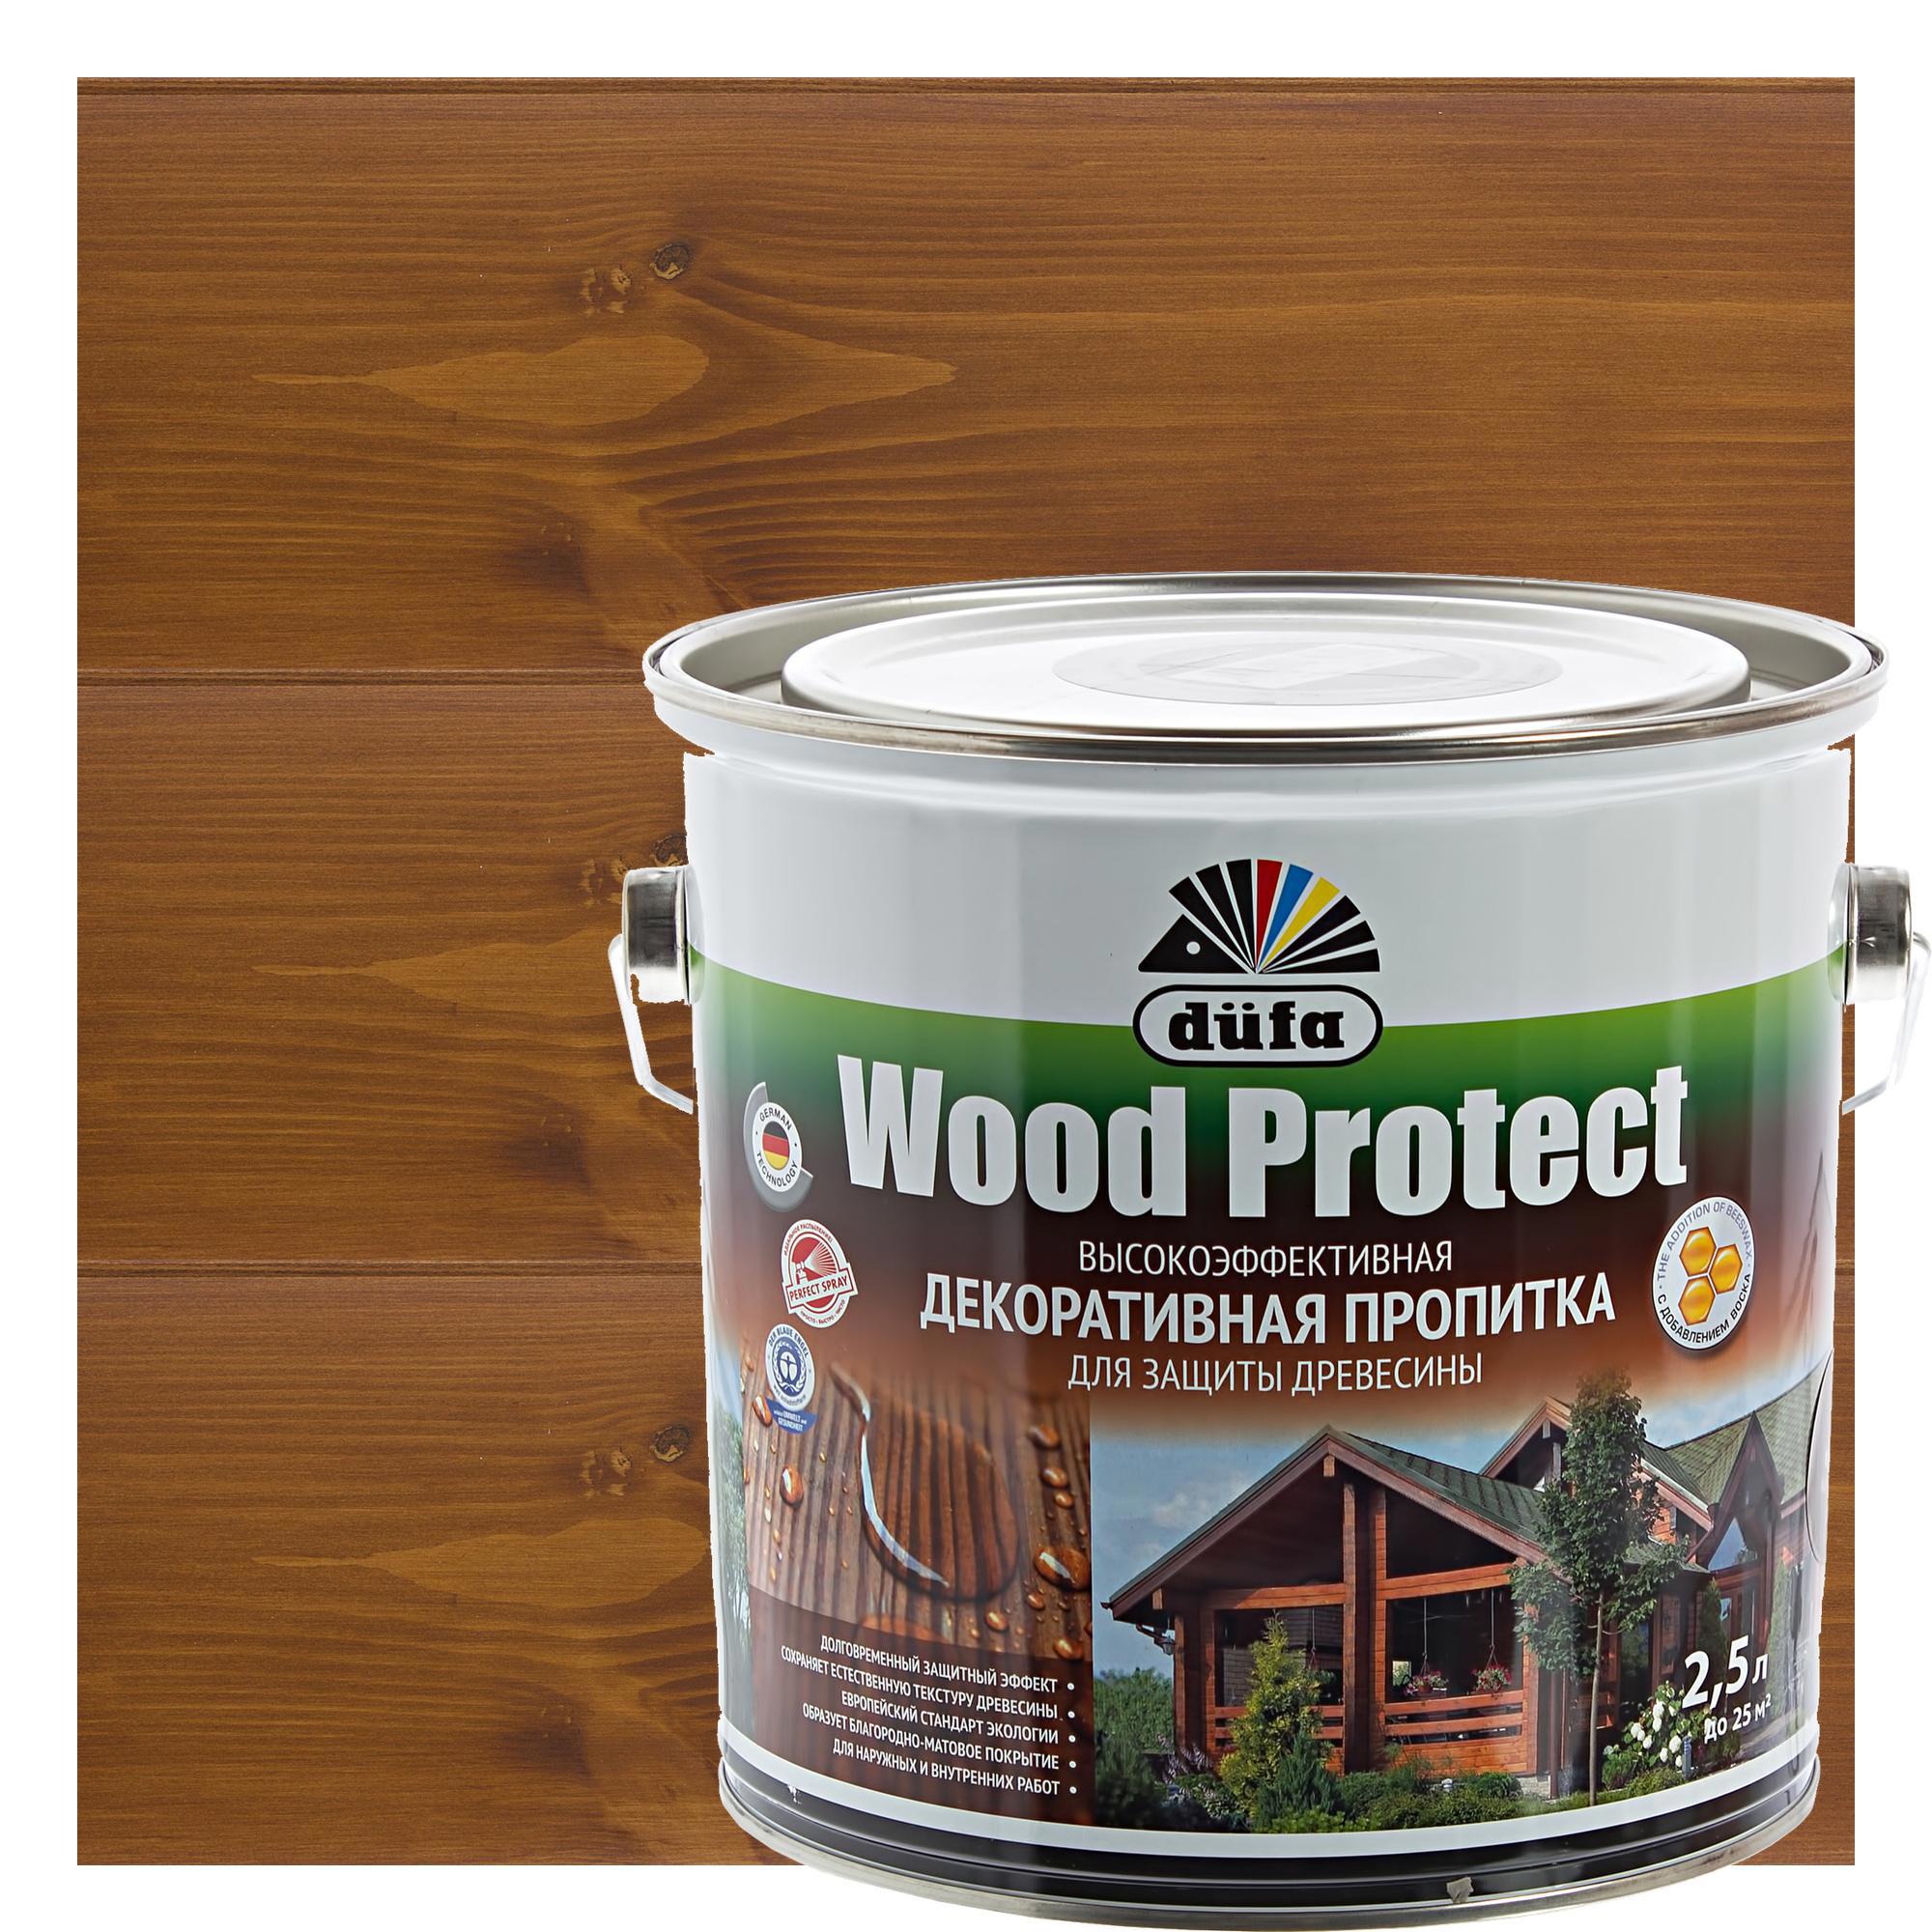 Антисептик орех. Дюфа Wood protect цвет орех антисептик. Dufa Wood protect орех 2.5 л. Антисептик Вуд Протект 2,5л тик. Пропитка декоративная для защиты древесины Dufa Wood protect.